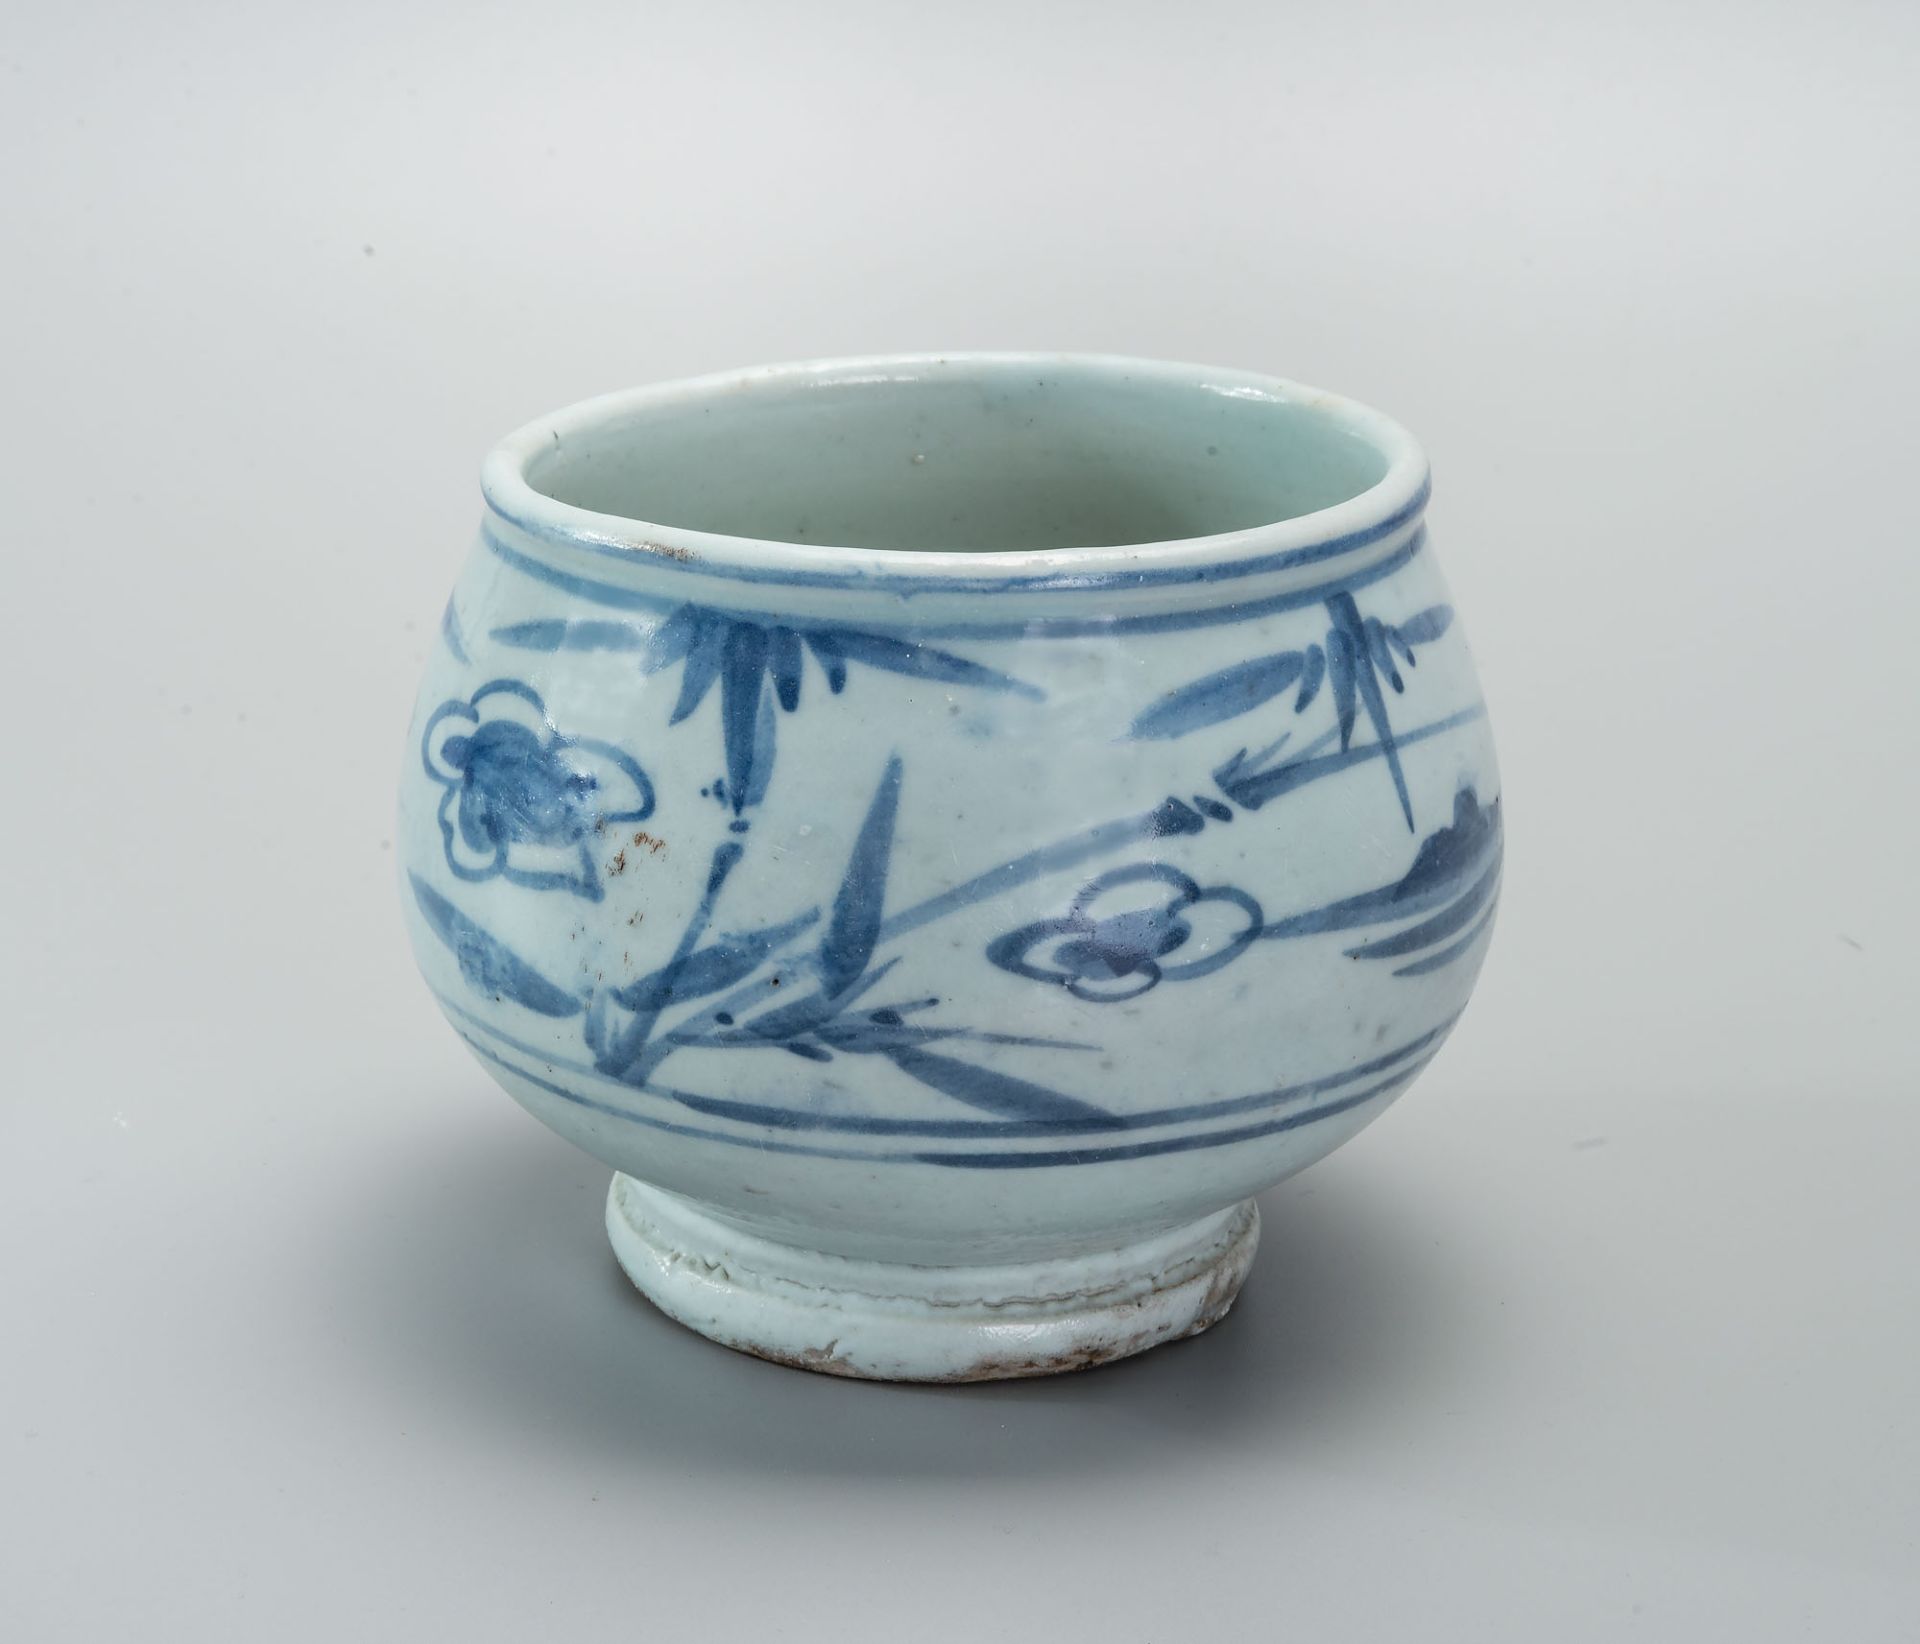 A Blue and White Porcelain Rice Bowl, Korea, Joseon Dynasty (1392-1910)